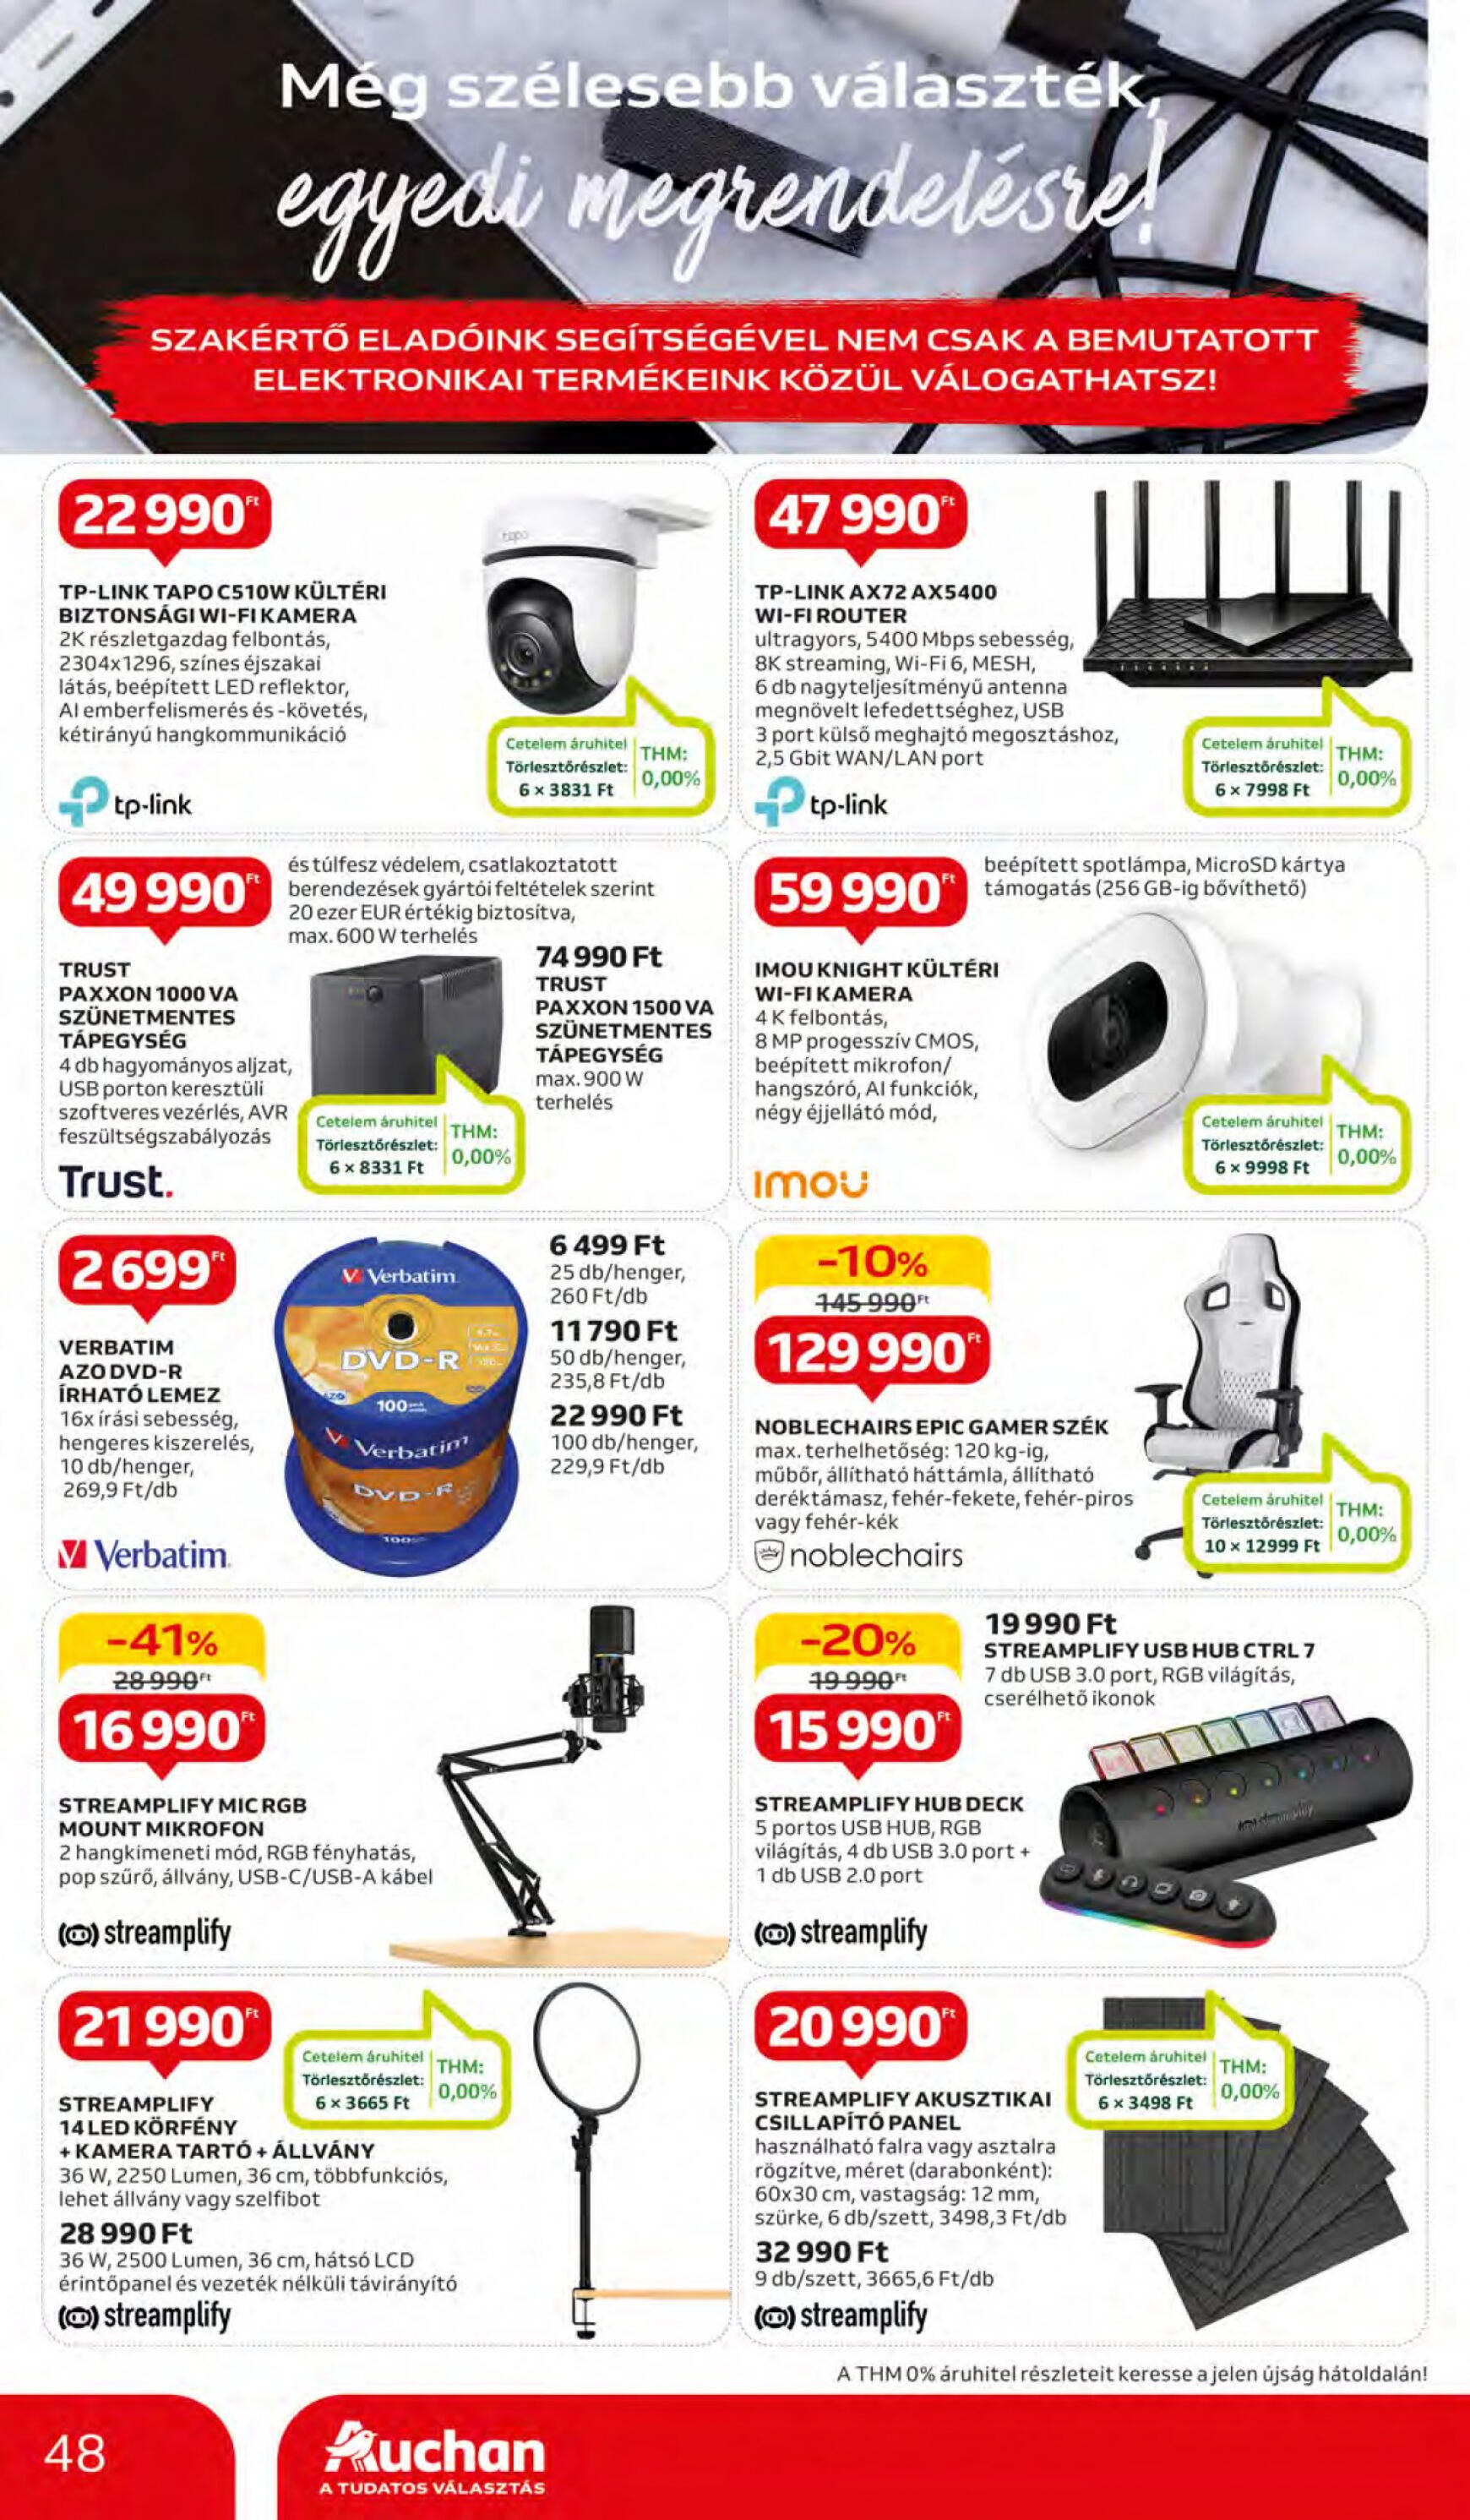 auchan - Aktuális újság Auchan 04.11. - 04.17. - page: 48